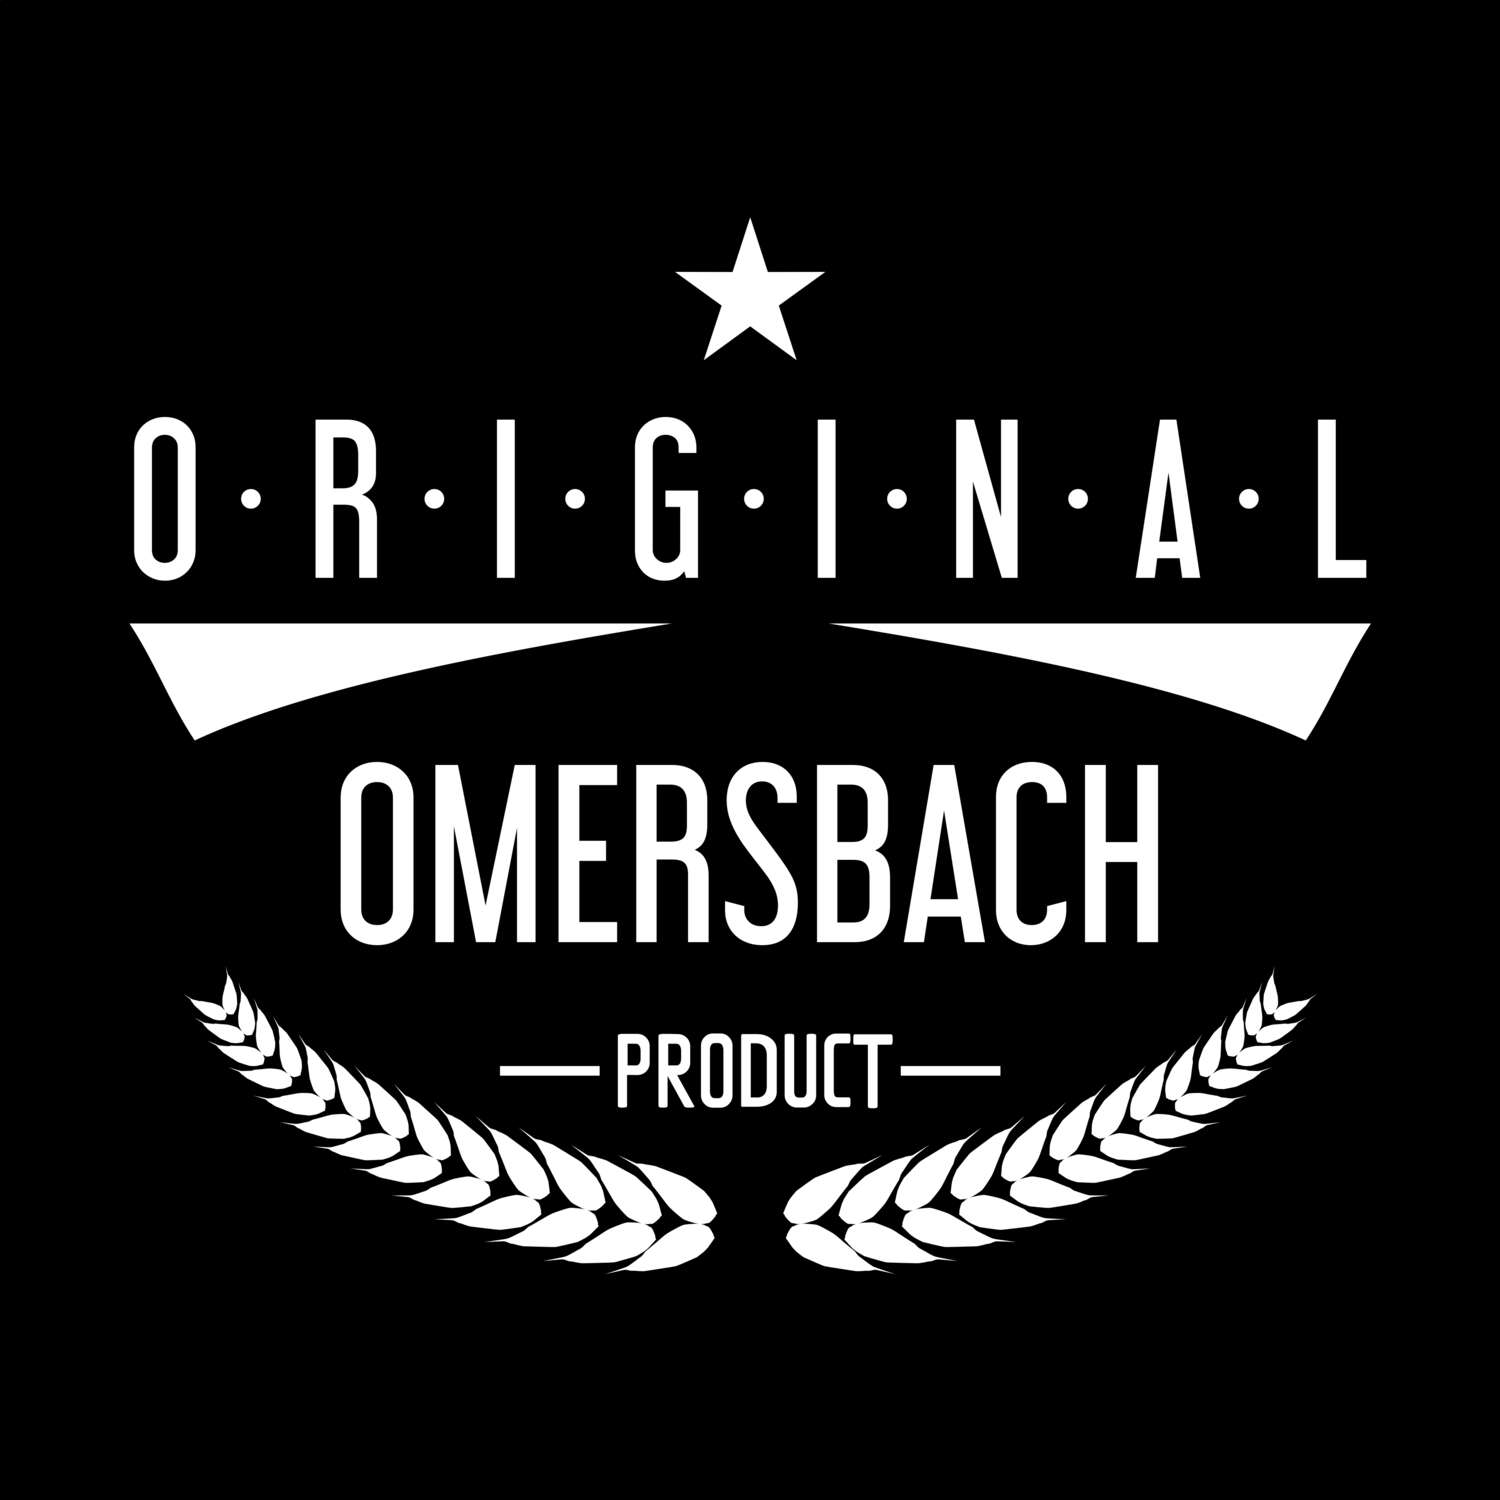 Omersbach T-Shirt »Original Product«